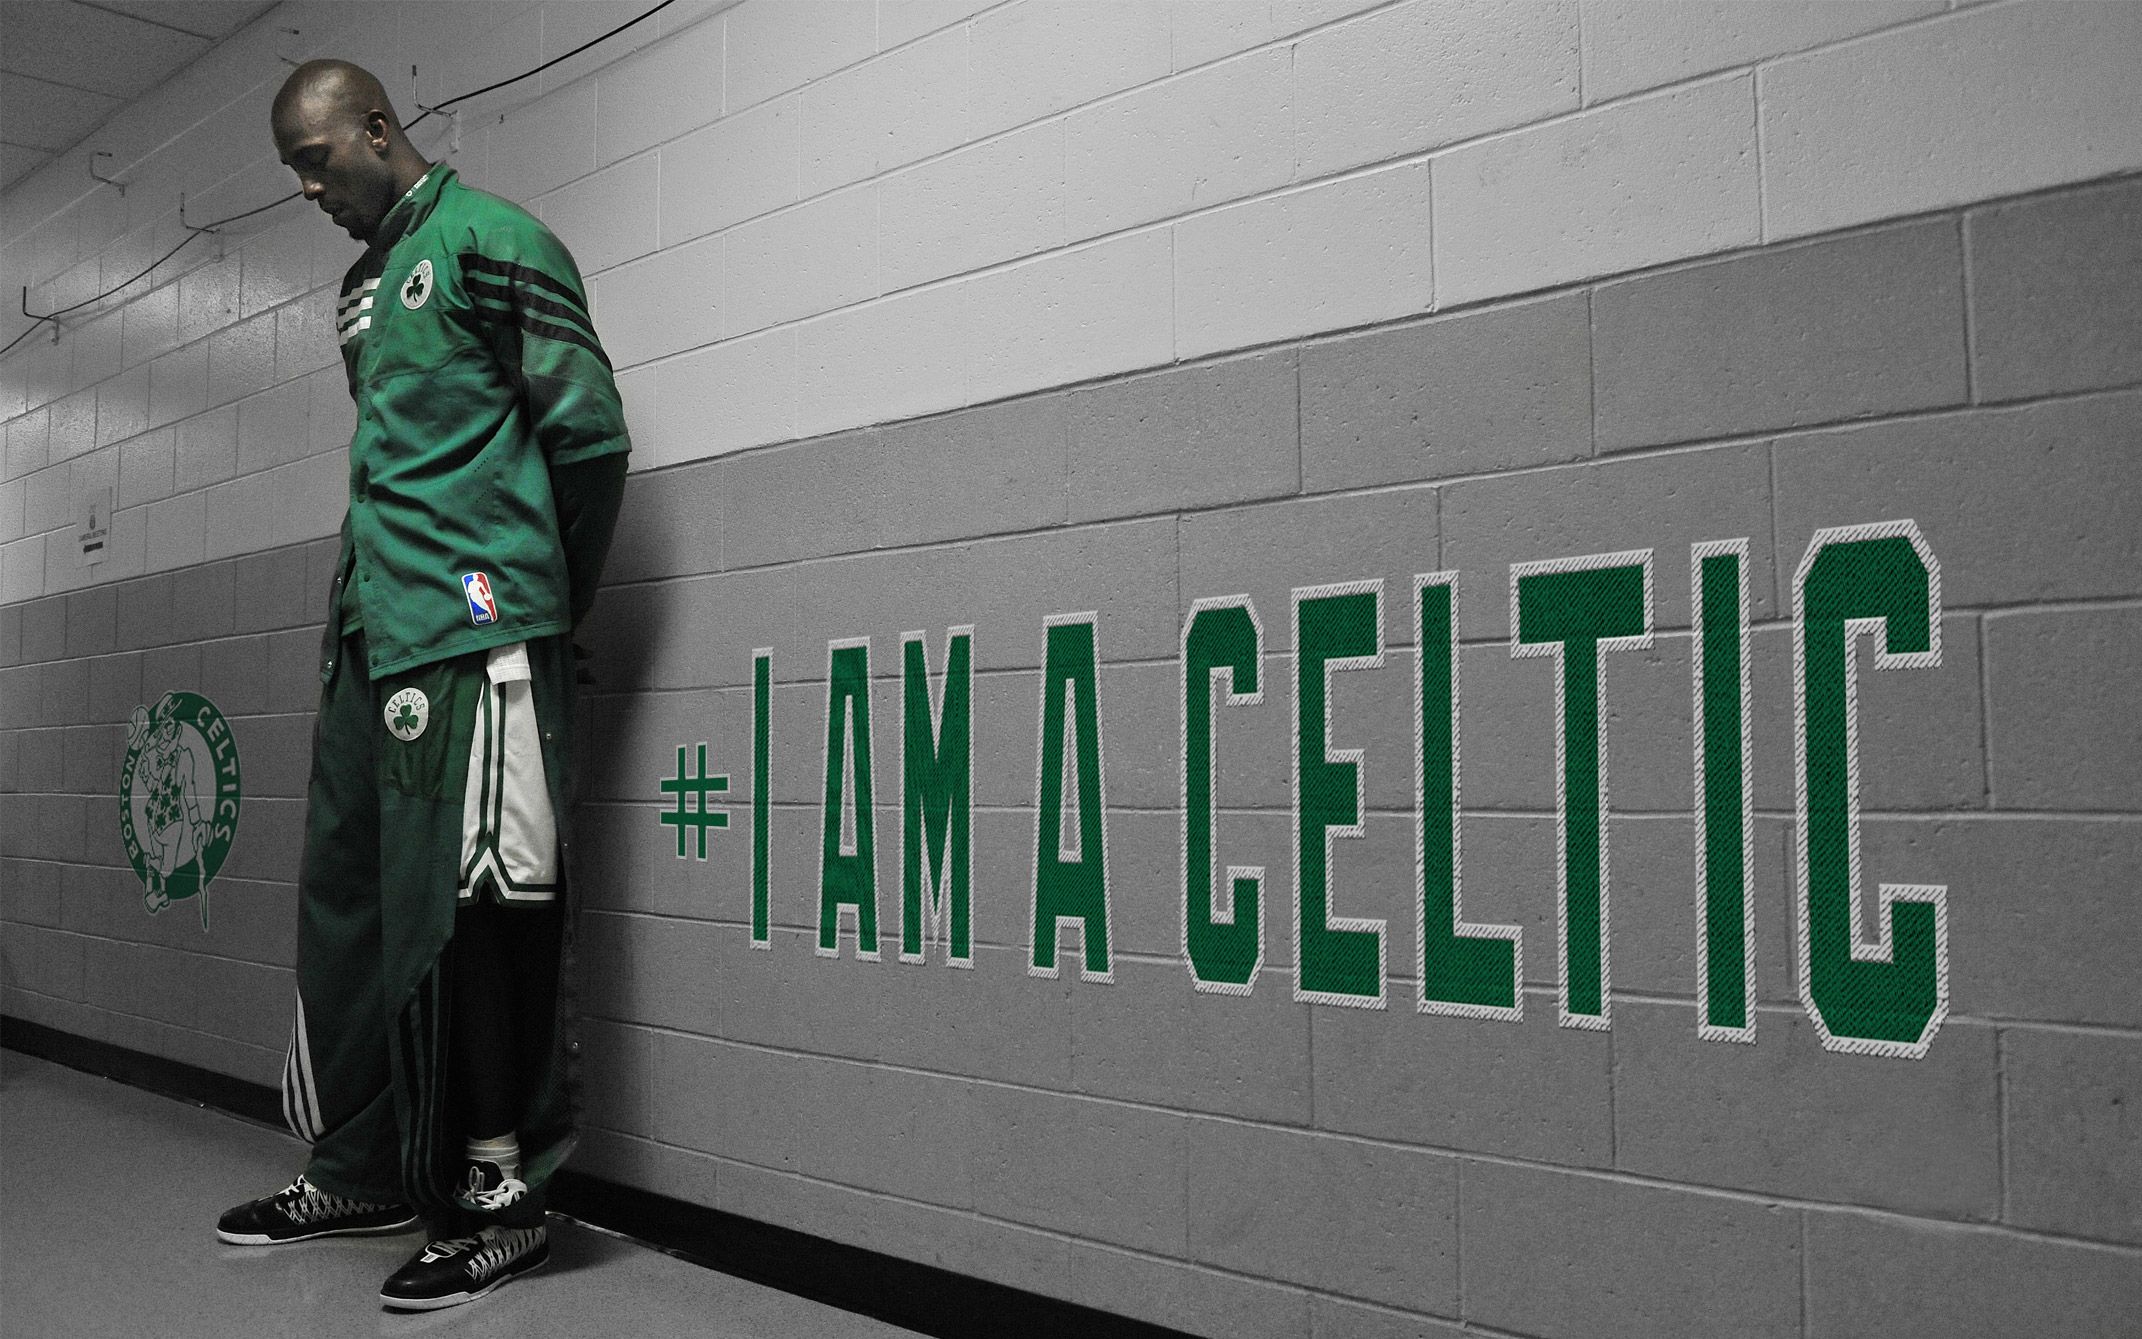 Boston Celtics Wallpaper Image Photo Picture Background